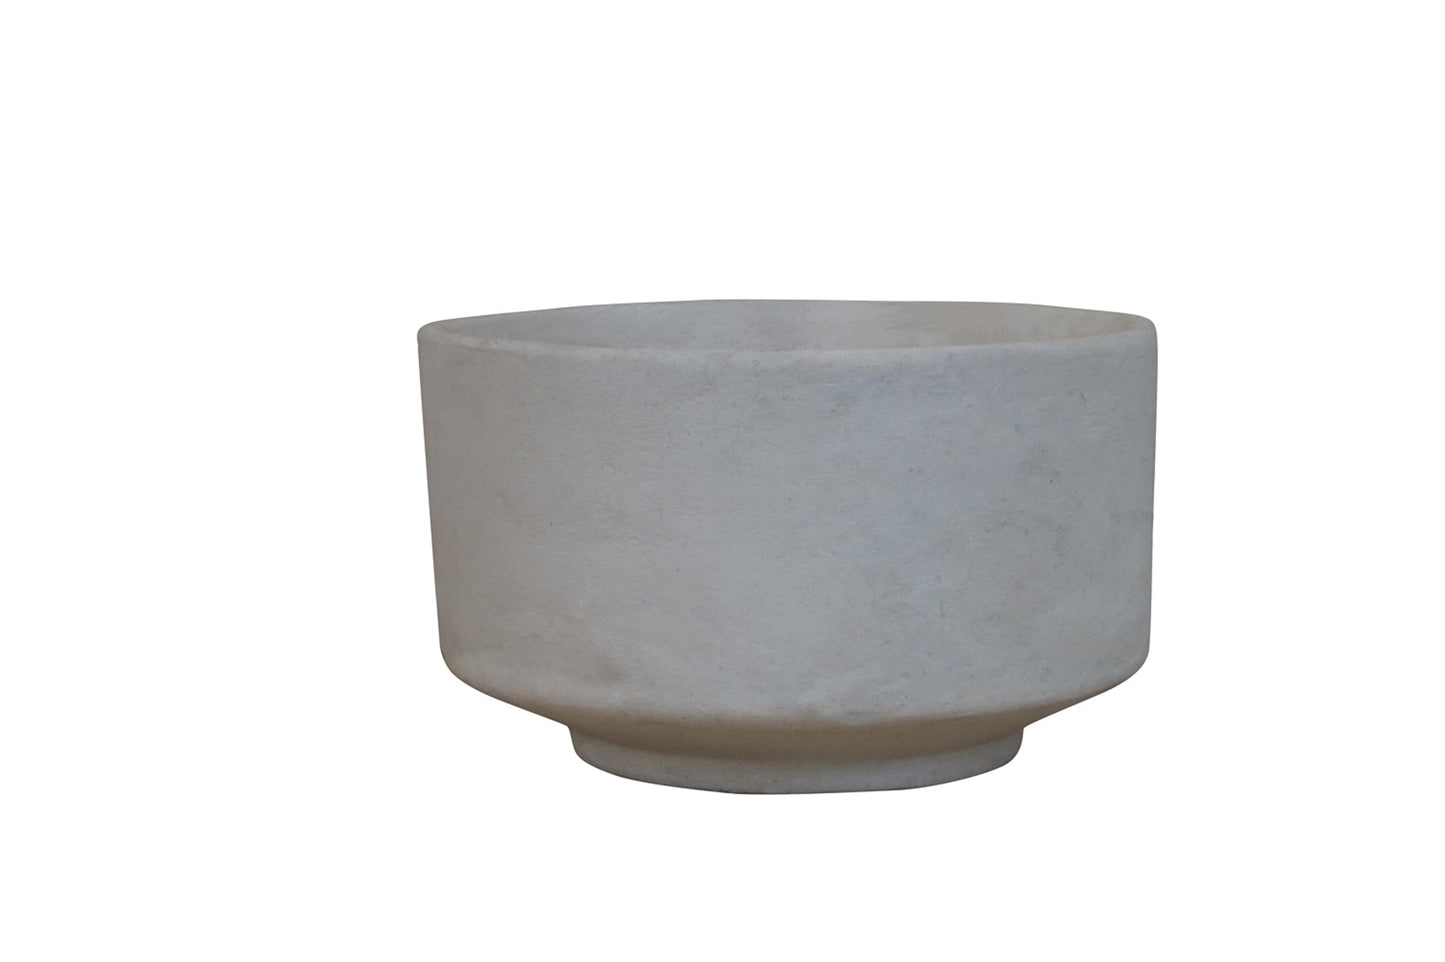 Small Paper Mache Bowl in Natural White